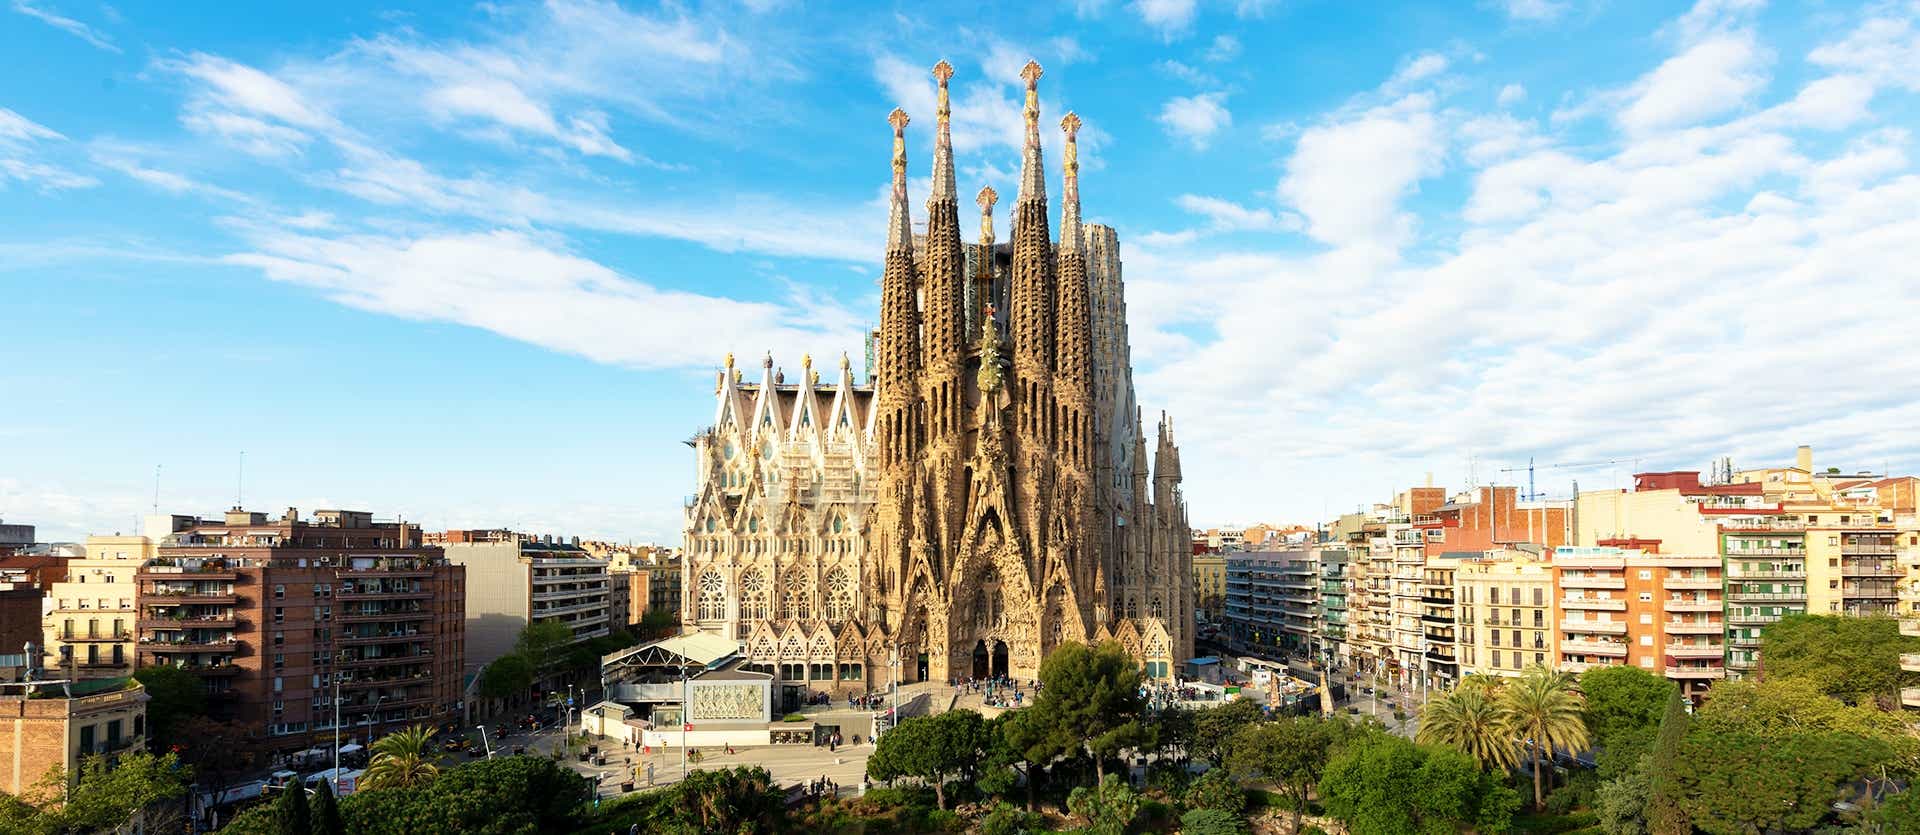 Sagrada Família <span class="iconos separador"></span> Barcelona <span class="iconos separador"></span> España